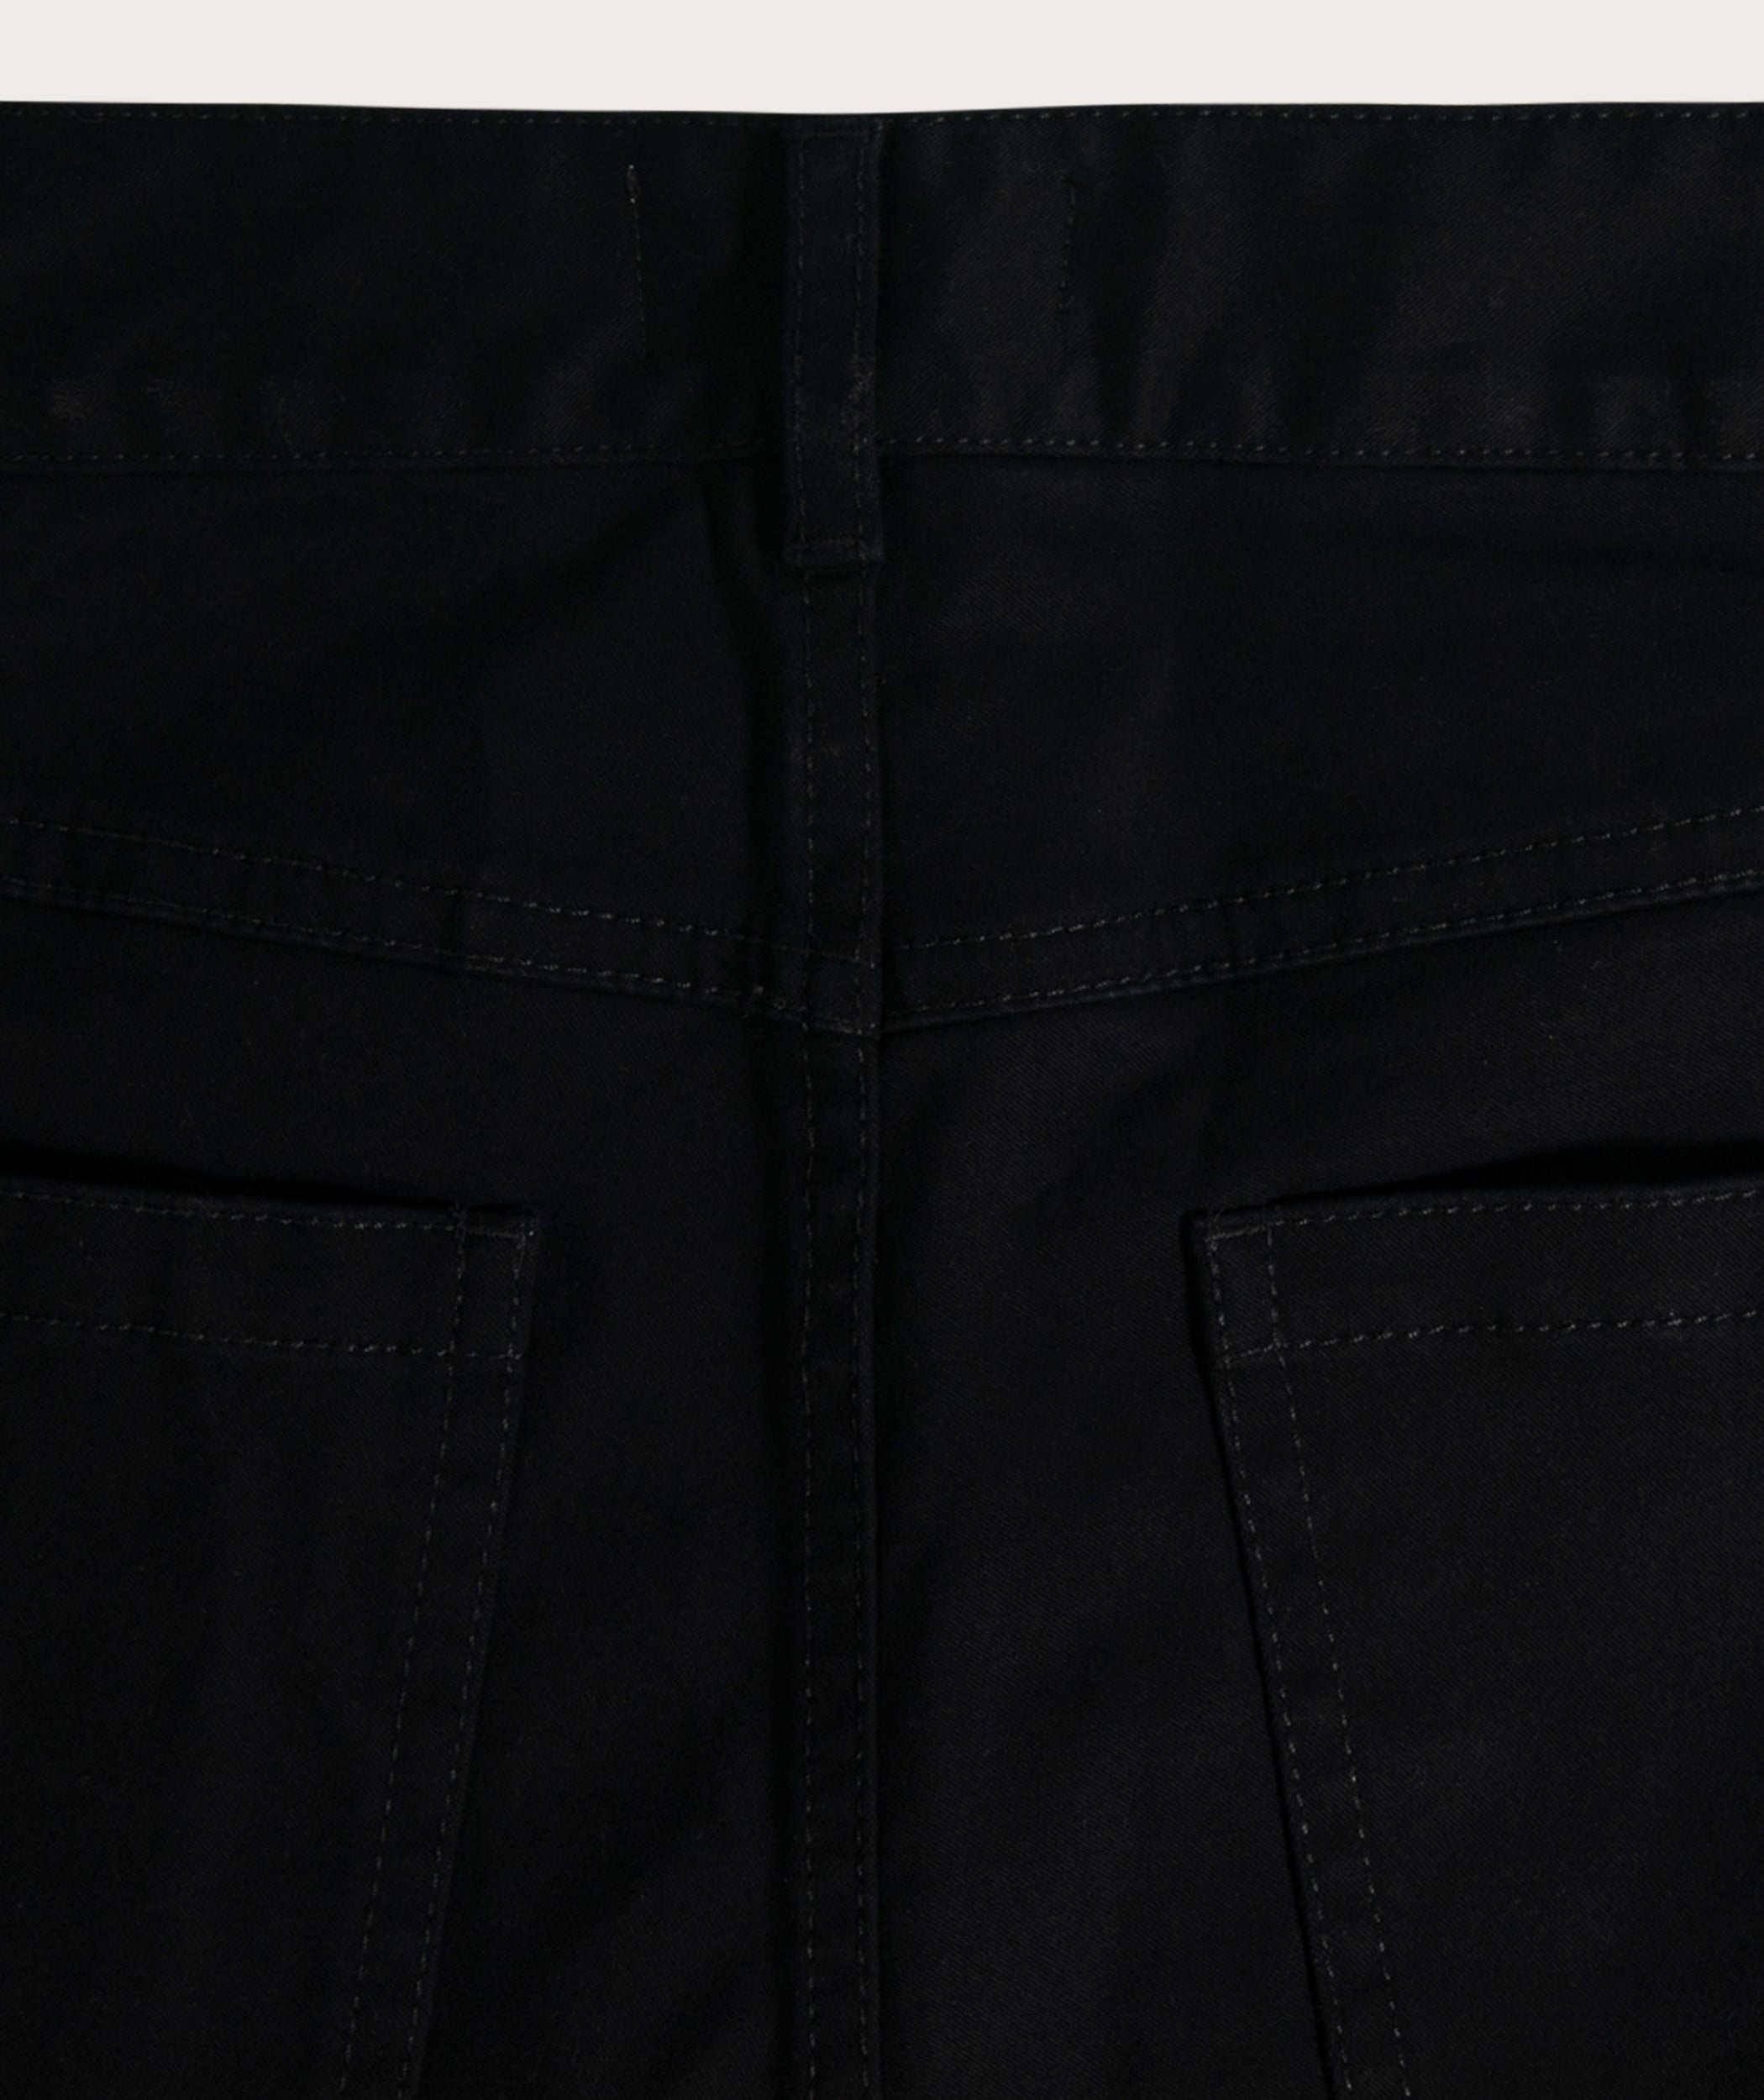 Ladies Regular Fit Trousers - Black